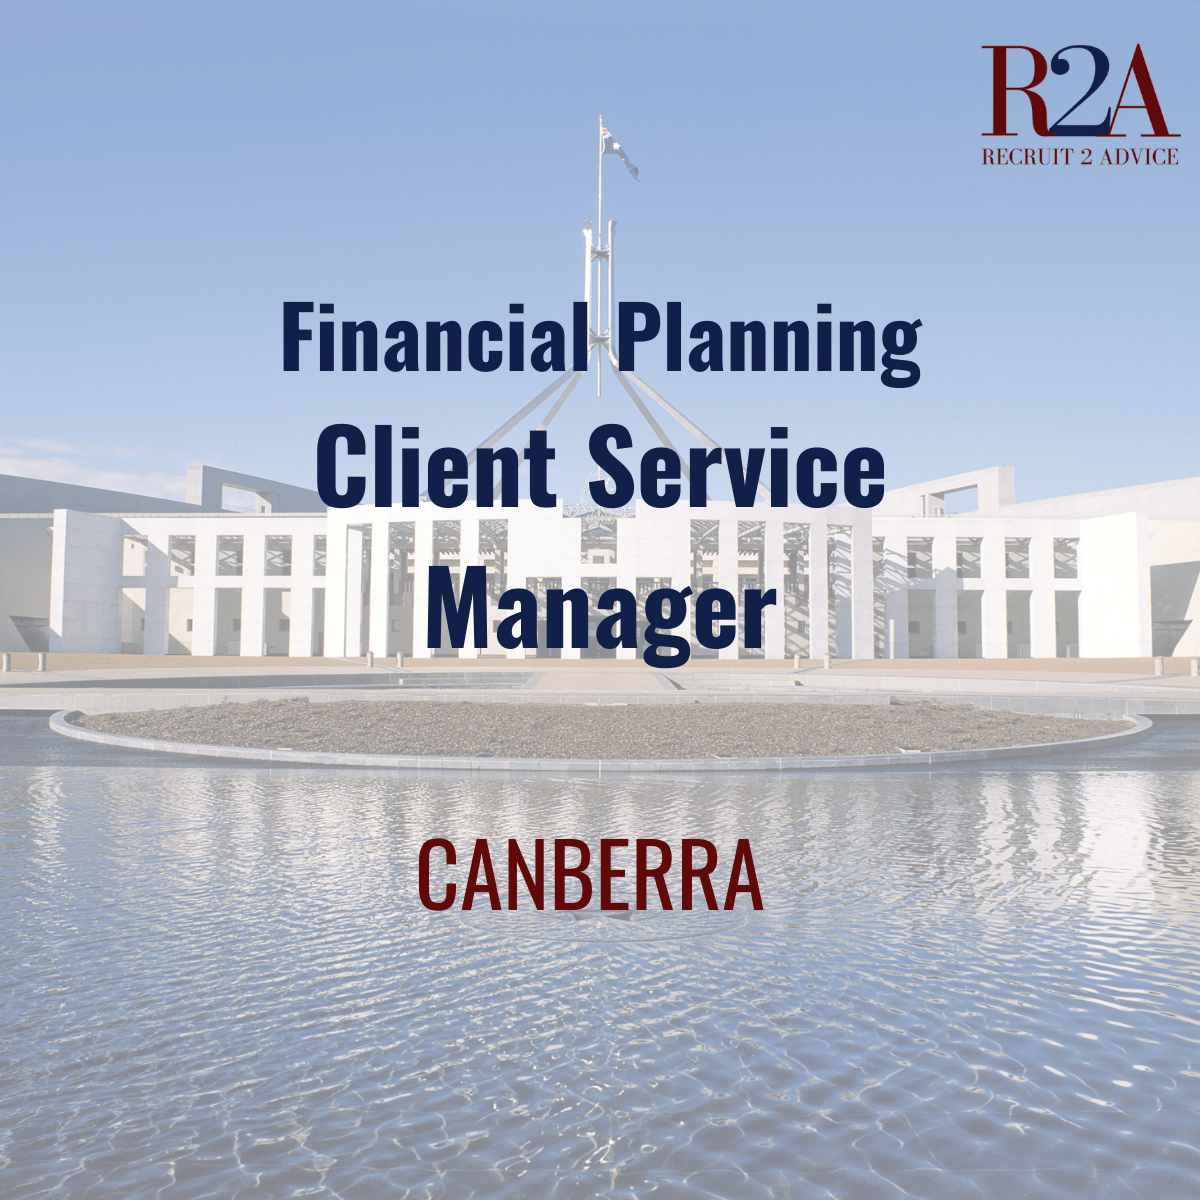 Recruit 2 Advice | Financial Planning Recruitment | Client Service Manager